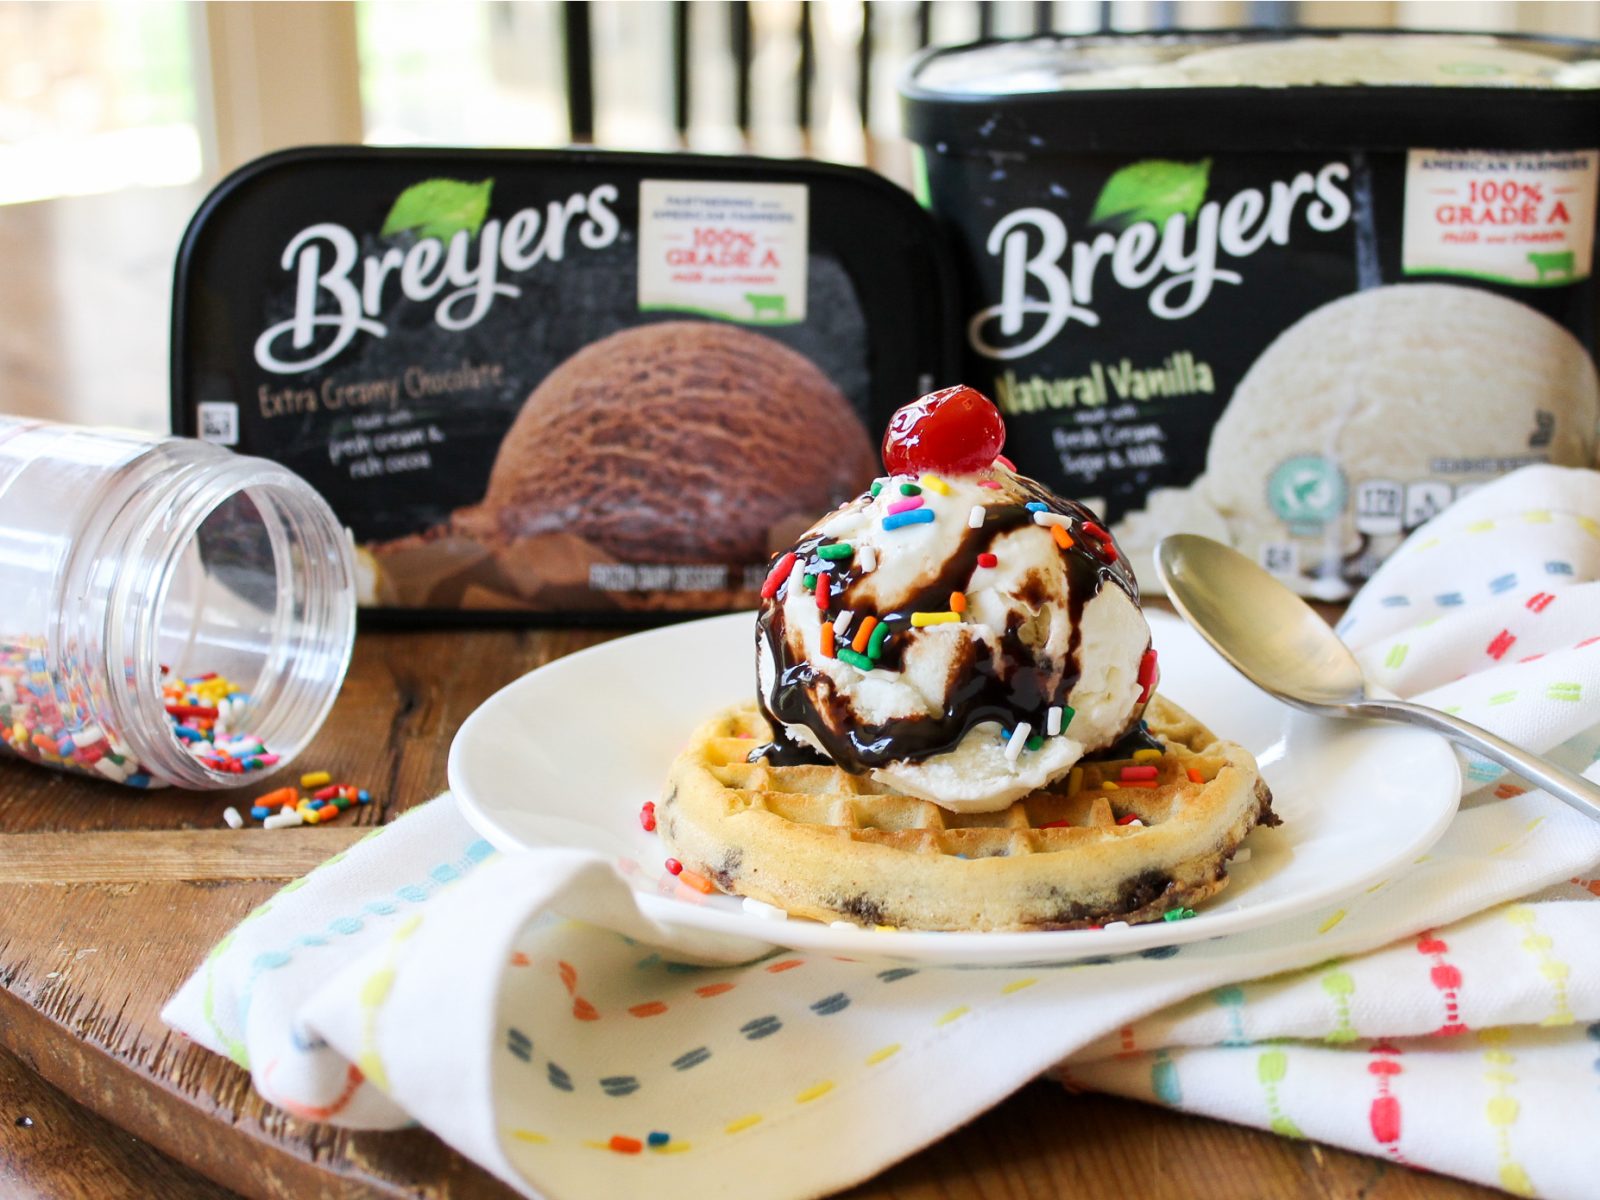 Save Big On Breyers Ice Cream & Whip Up A Tasty Waffle Sundae